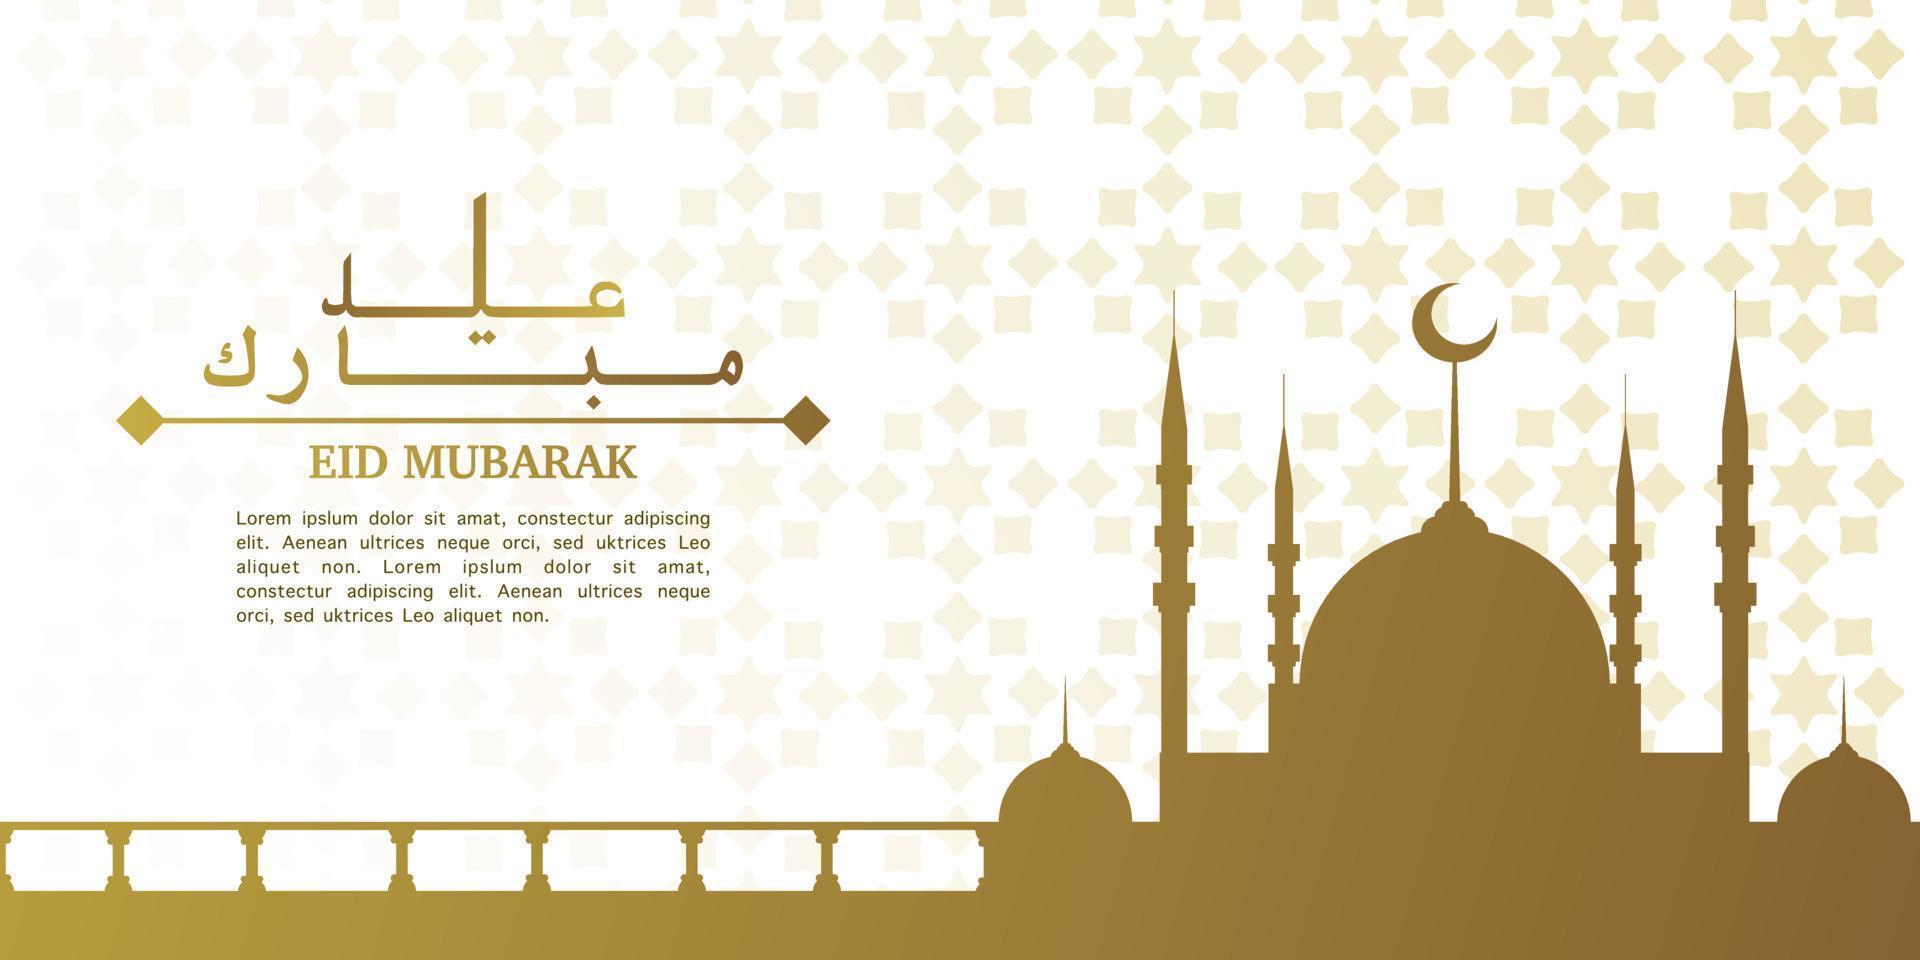 Eid mubarak illustration with golden colored mosque silhouette with ornament background, Eid greeting banner, Invitation Template, social media, etc. Eid Mubarak themed flat vector illustration.